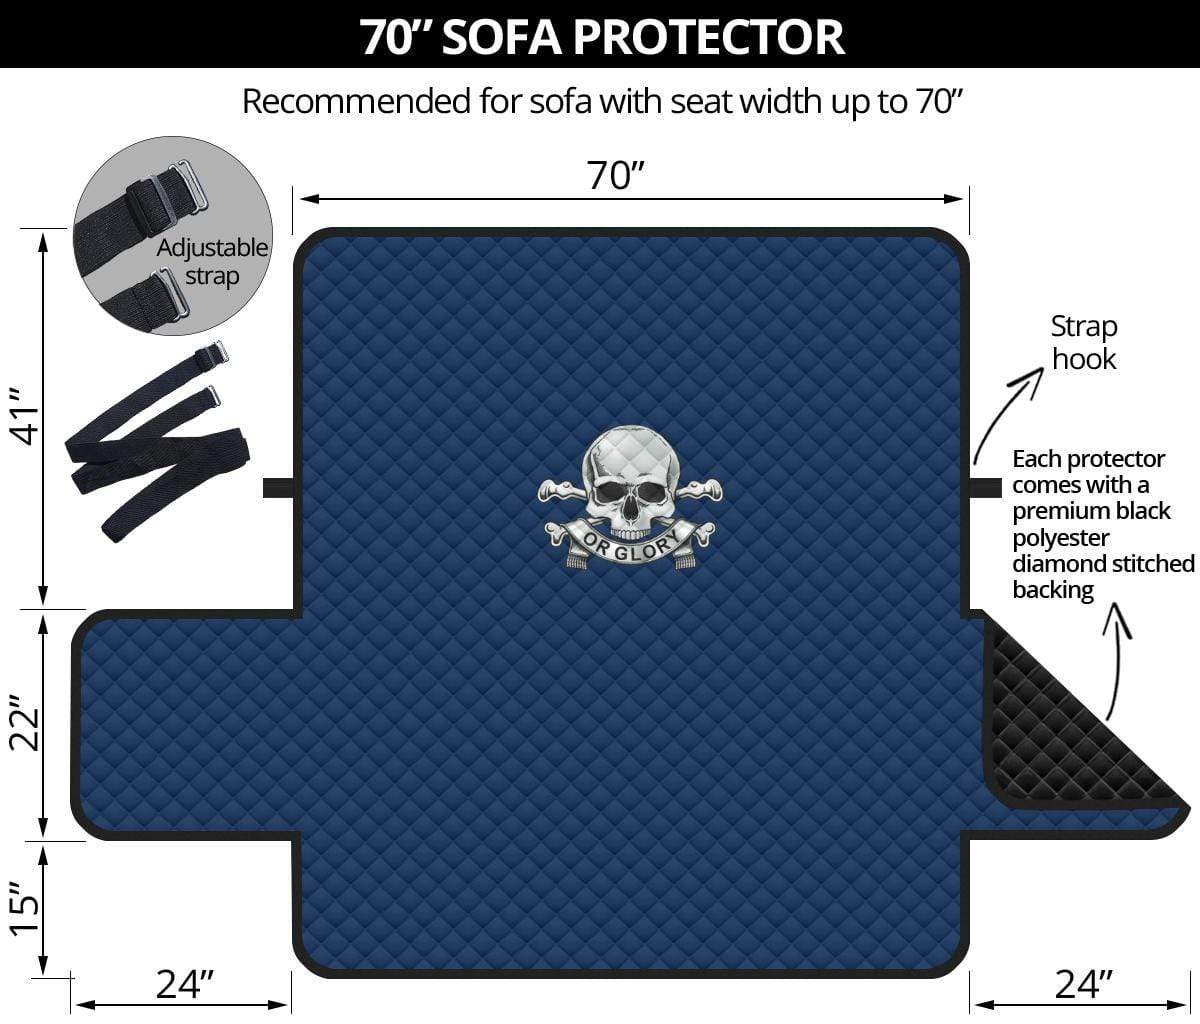 sofa protector 70" 17th/21st Lancers 3-Seat Sofa Protector